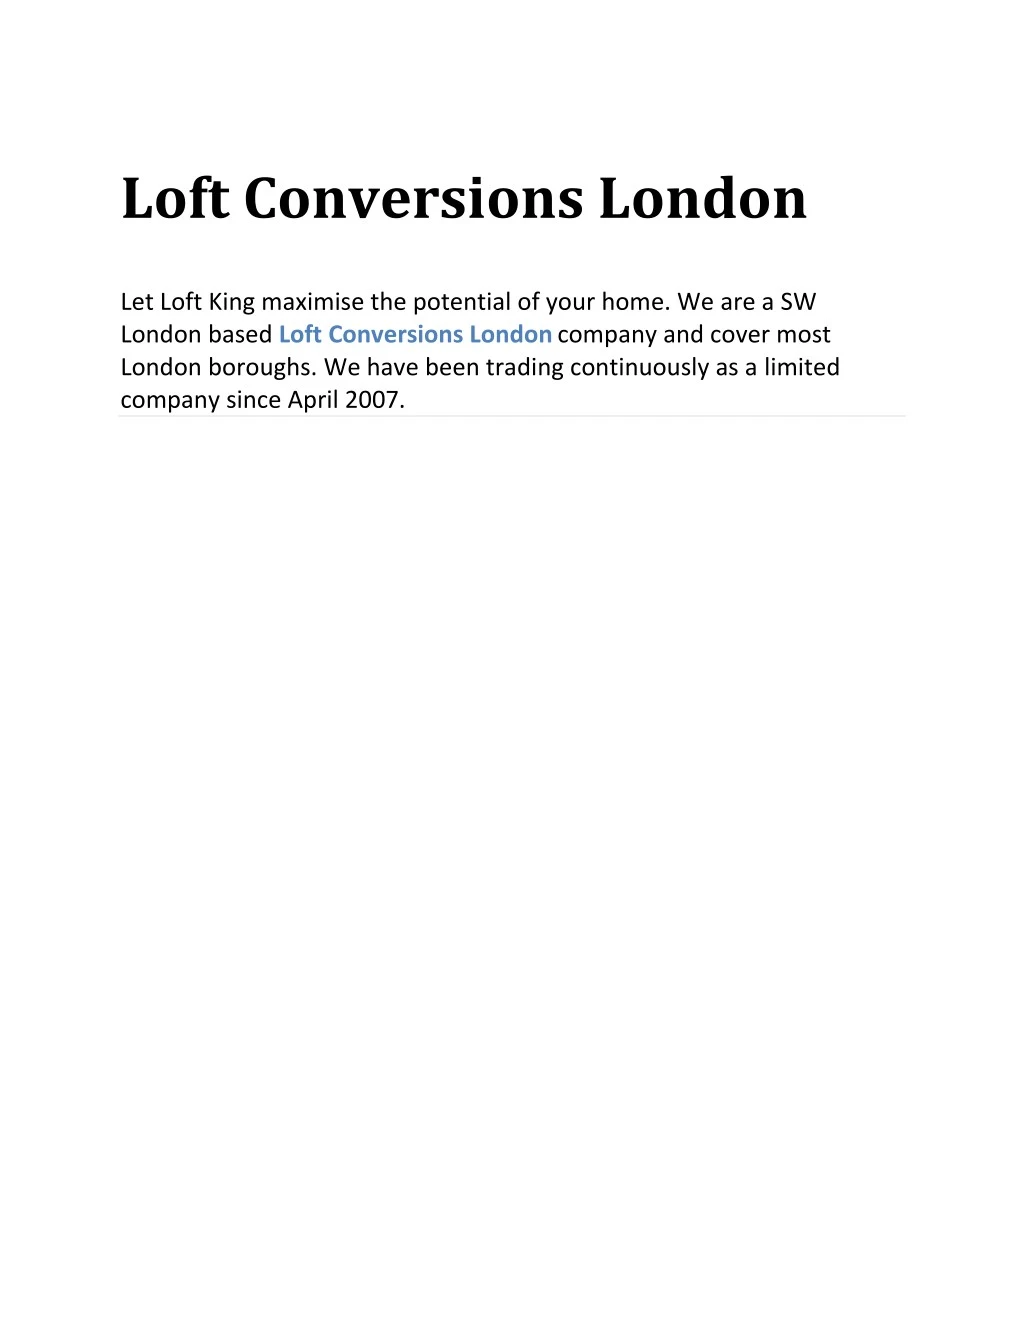 loft conversions london